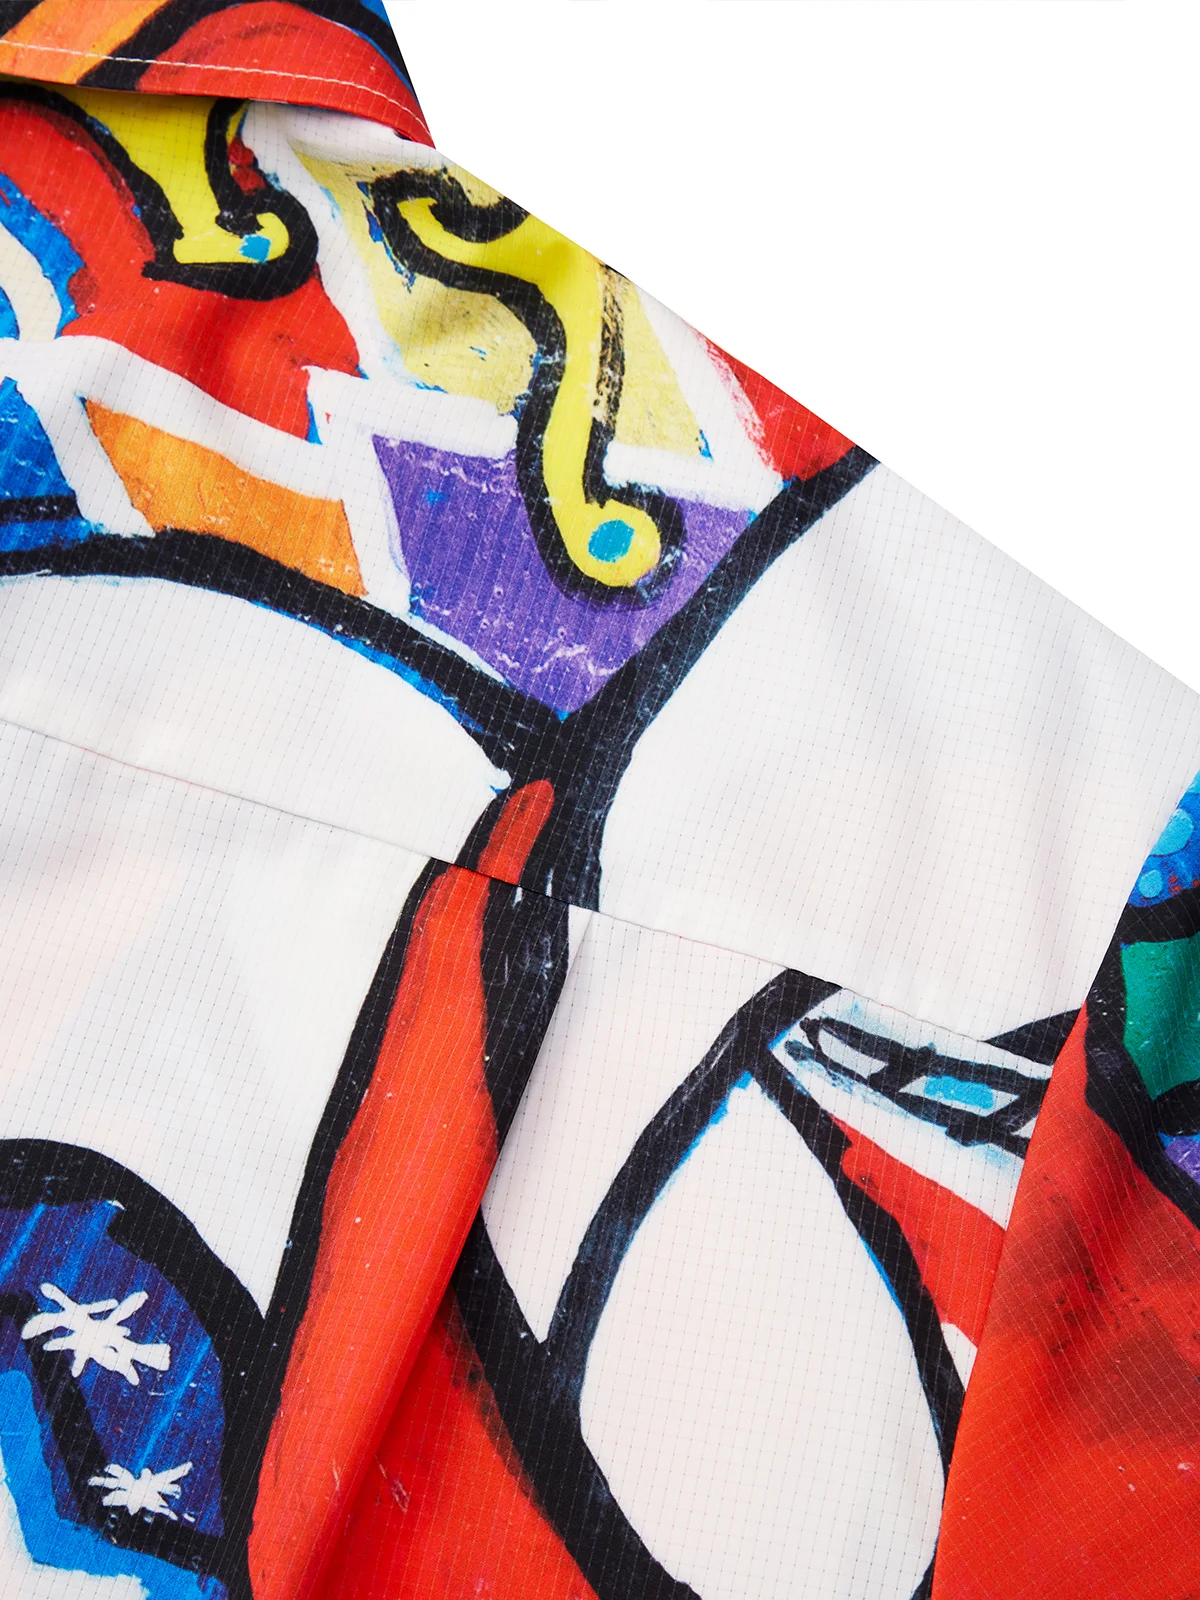 Royaura® x David Henry Lombardi Ribbon Dance Abstract Graffiti Art Hawaiian Shirt Oversize